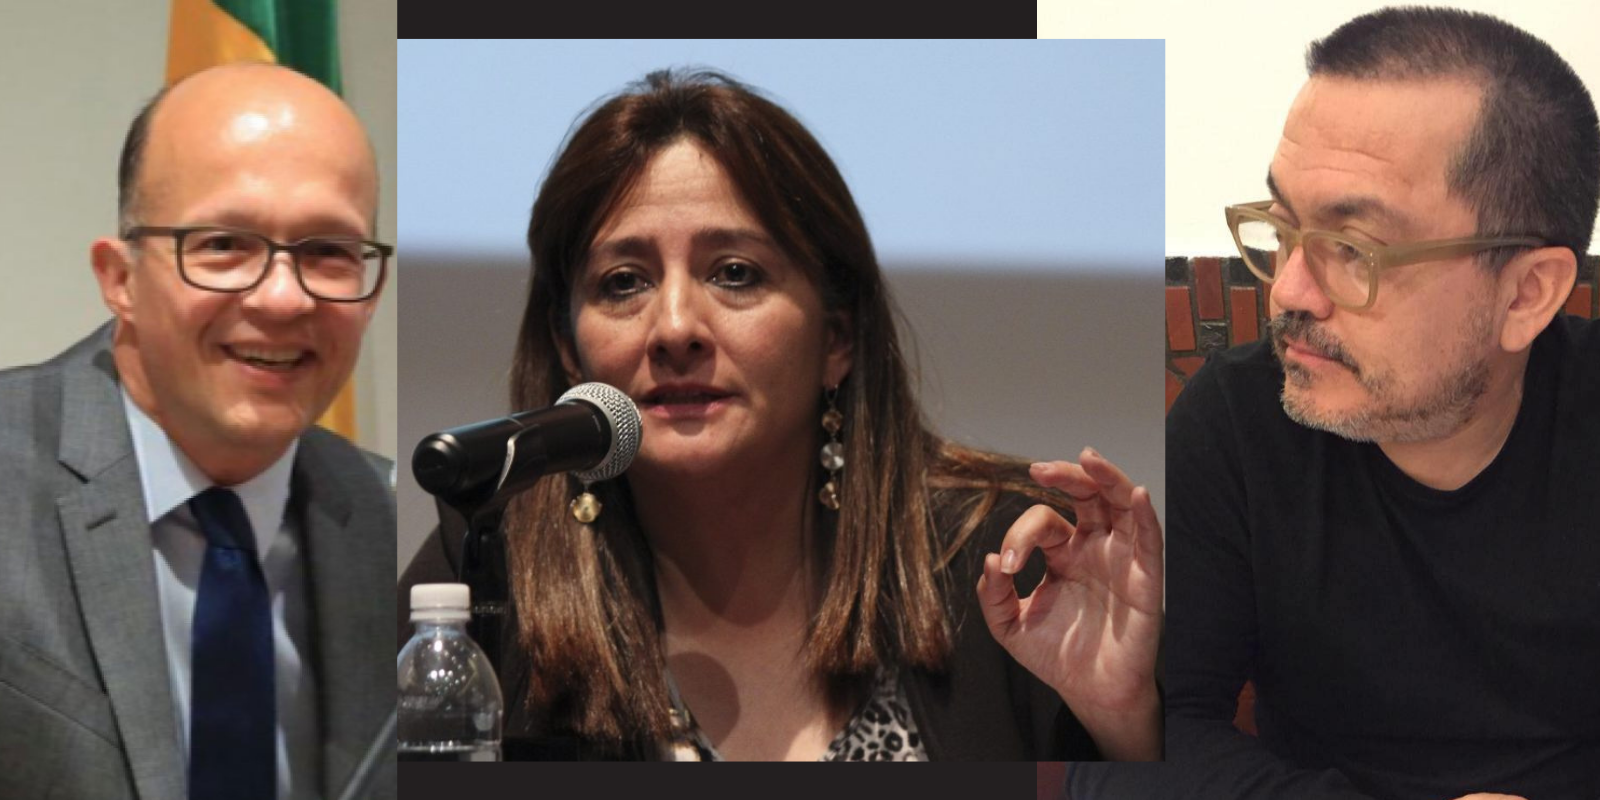 De izquierda a derecha: Jan-Michael Simon, Ángela María Buitrago y Alexandro Álvarez